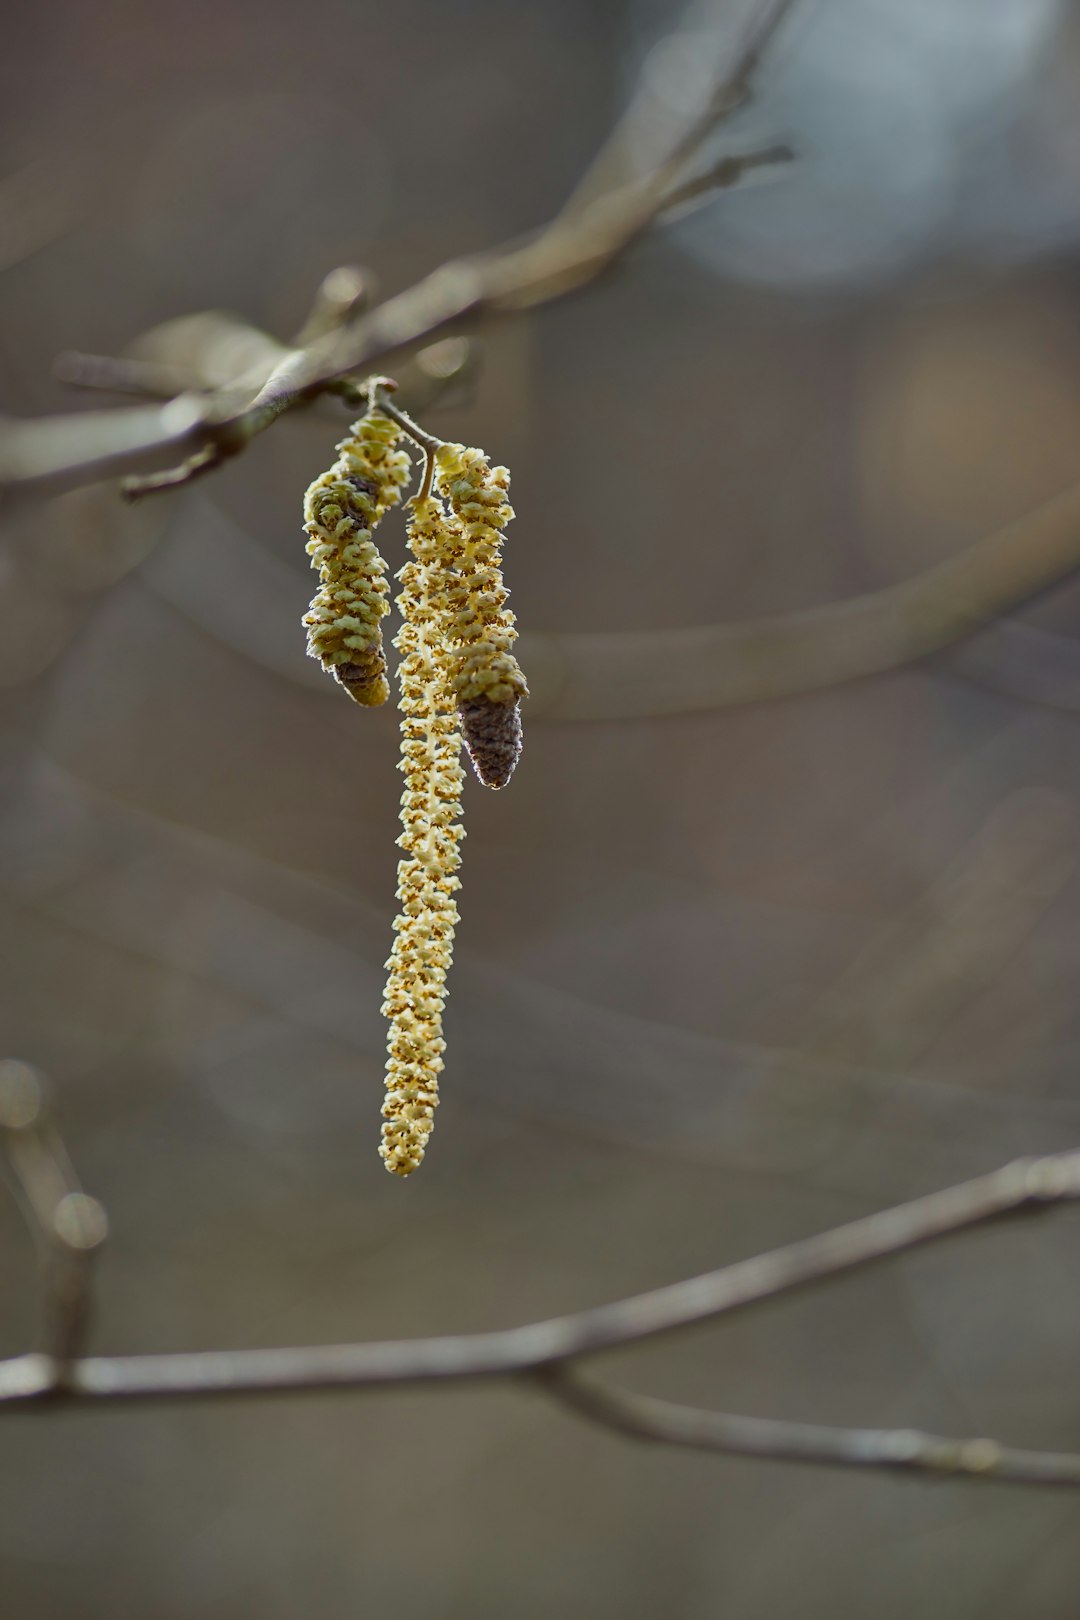 yellow and black caterpillar on brown stem in tilt shift lens